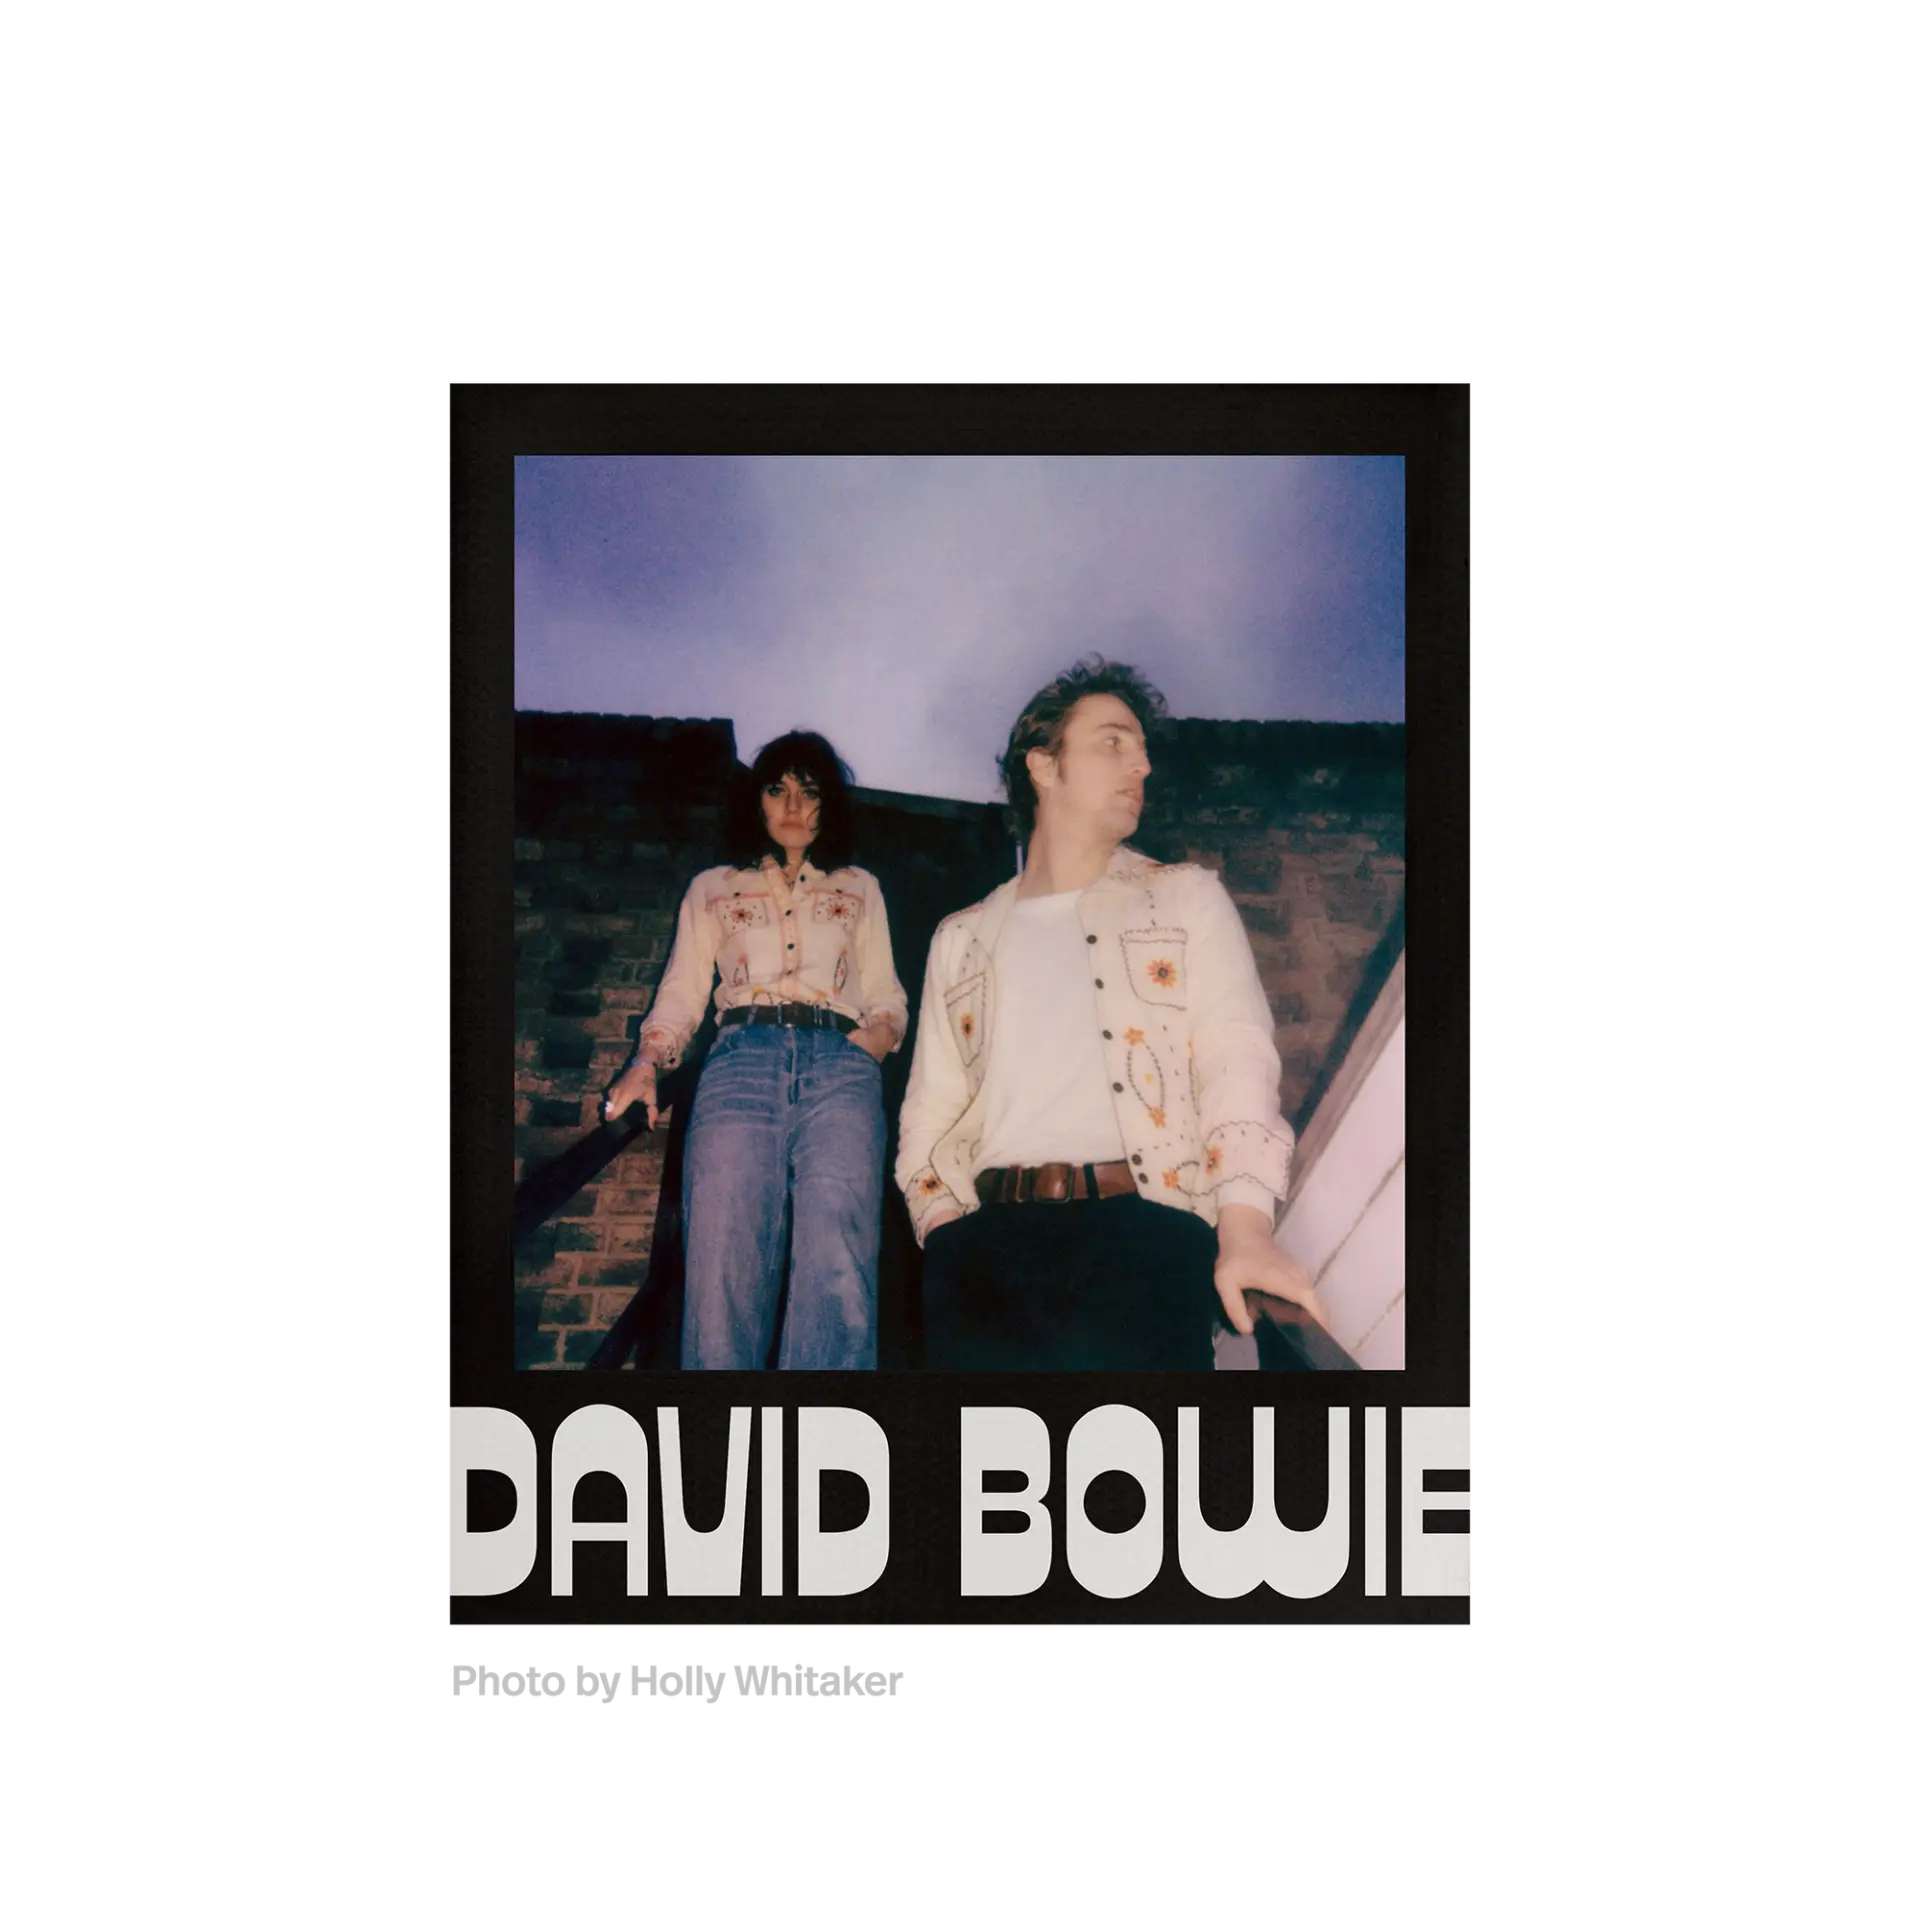 Касета Polaroid i-Type, David Bowie Edition Fotovramke 